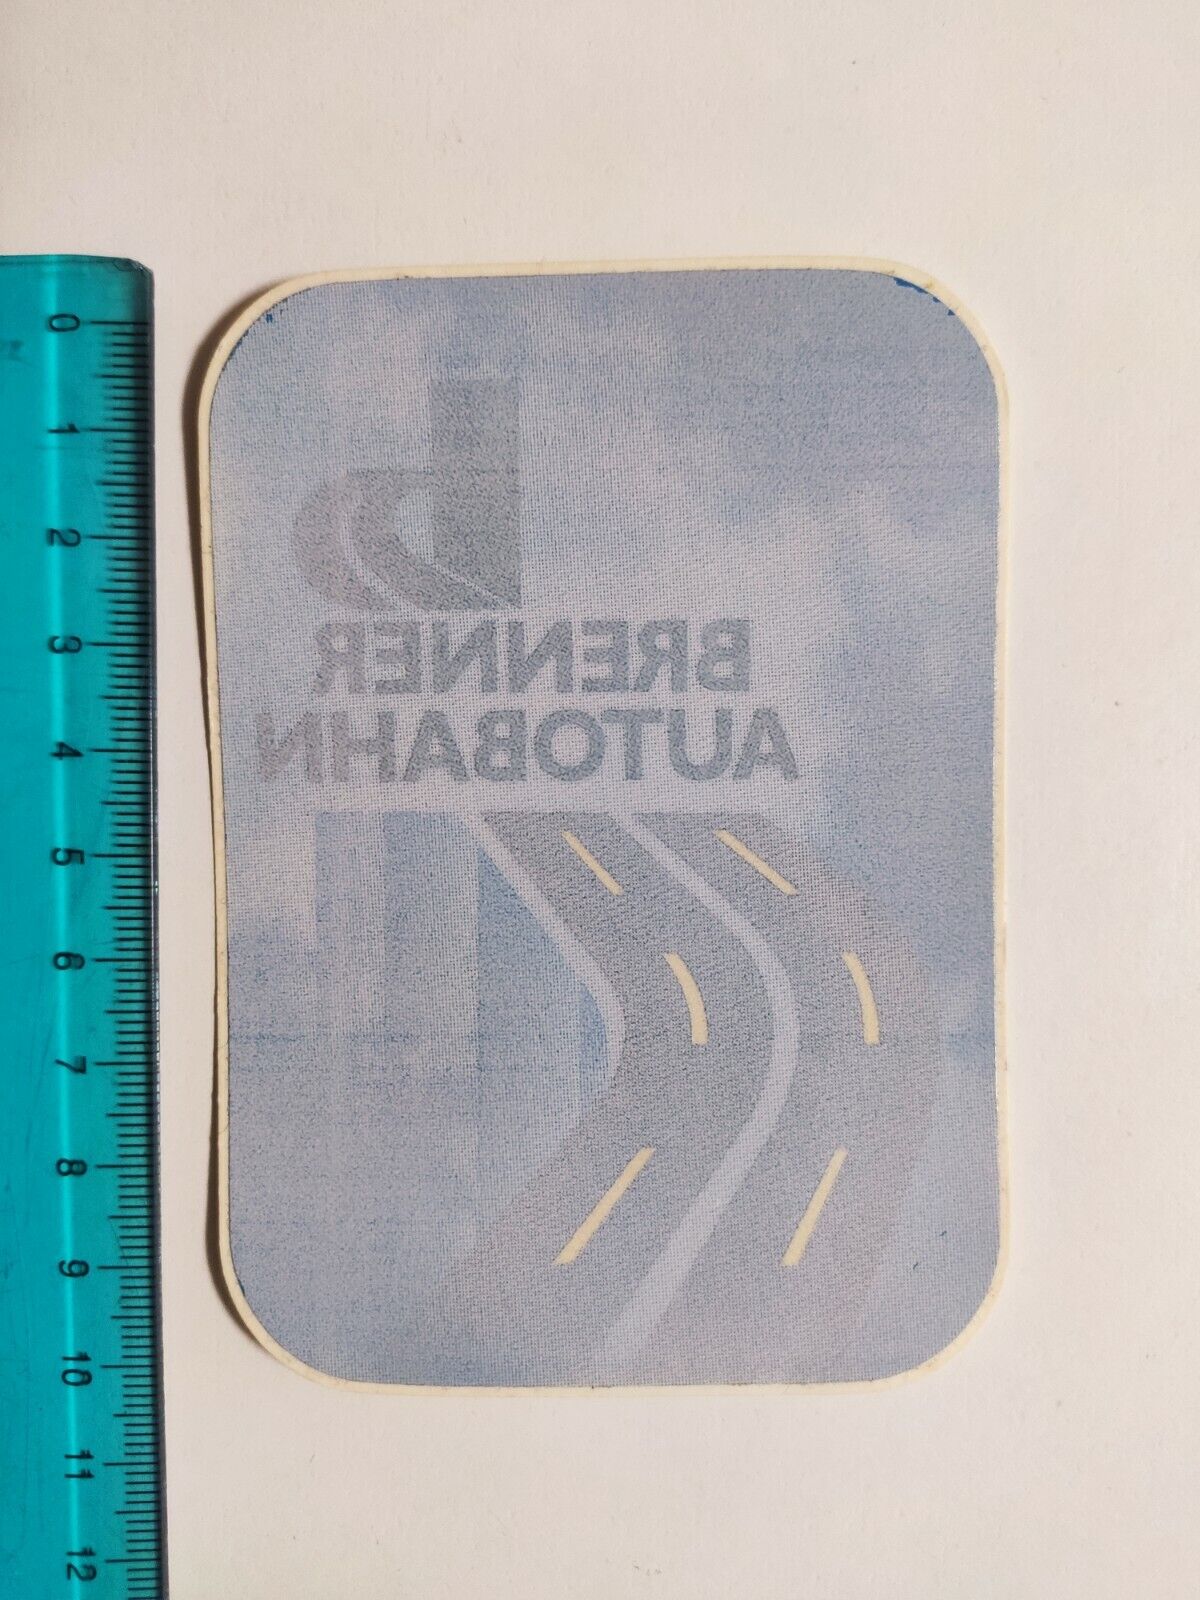 Adhesive Brenner Autobahn Sticker Autocollant Aufkleber Vintage 80s Original